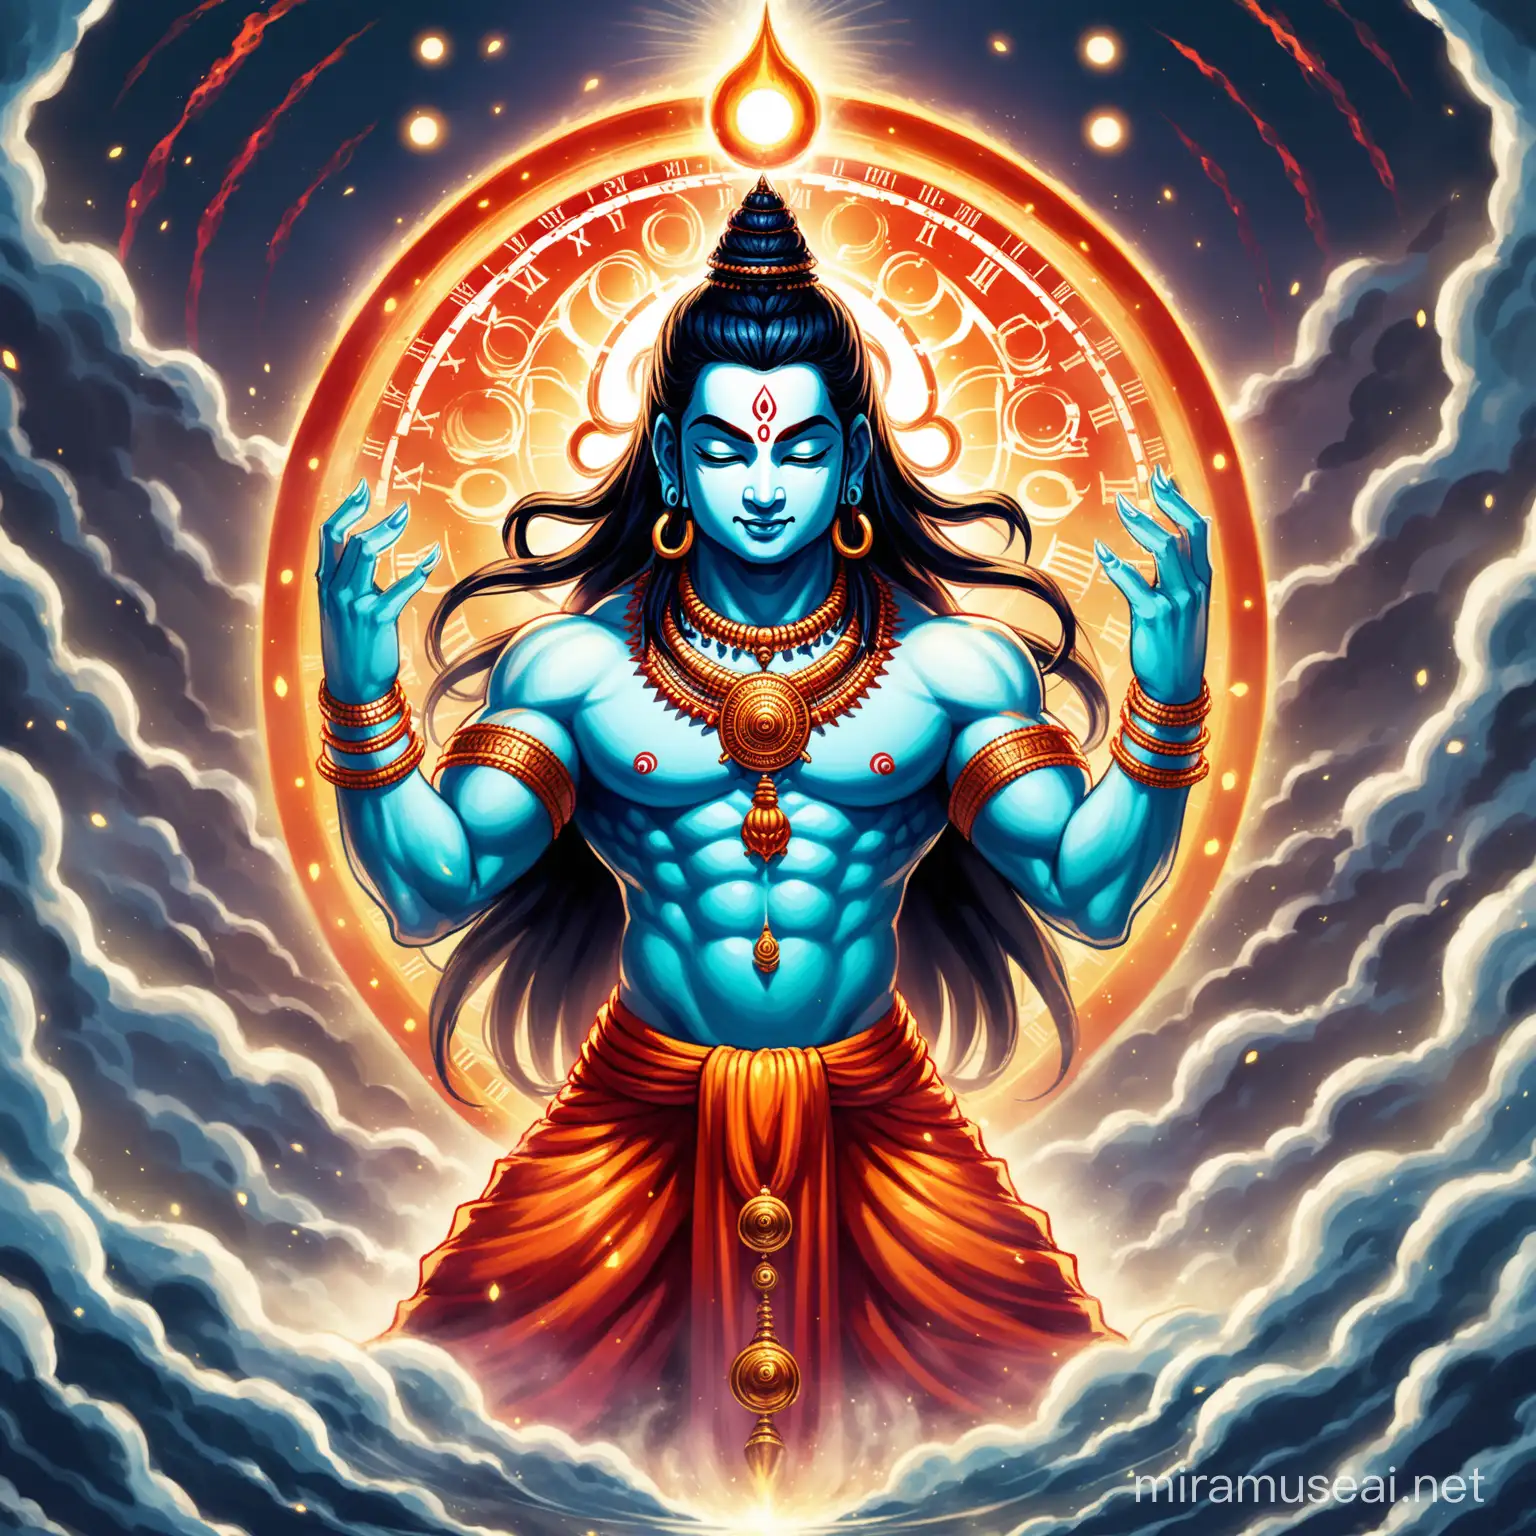 Mahakaal, reincarnation of Shiva, time keeper, destructor fierce